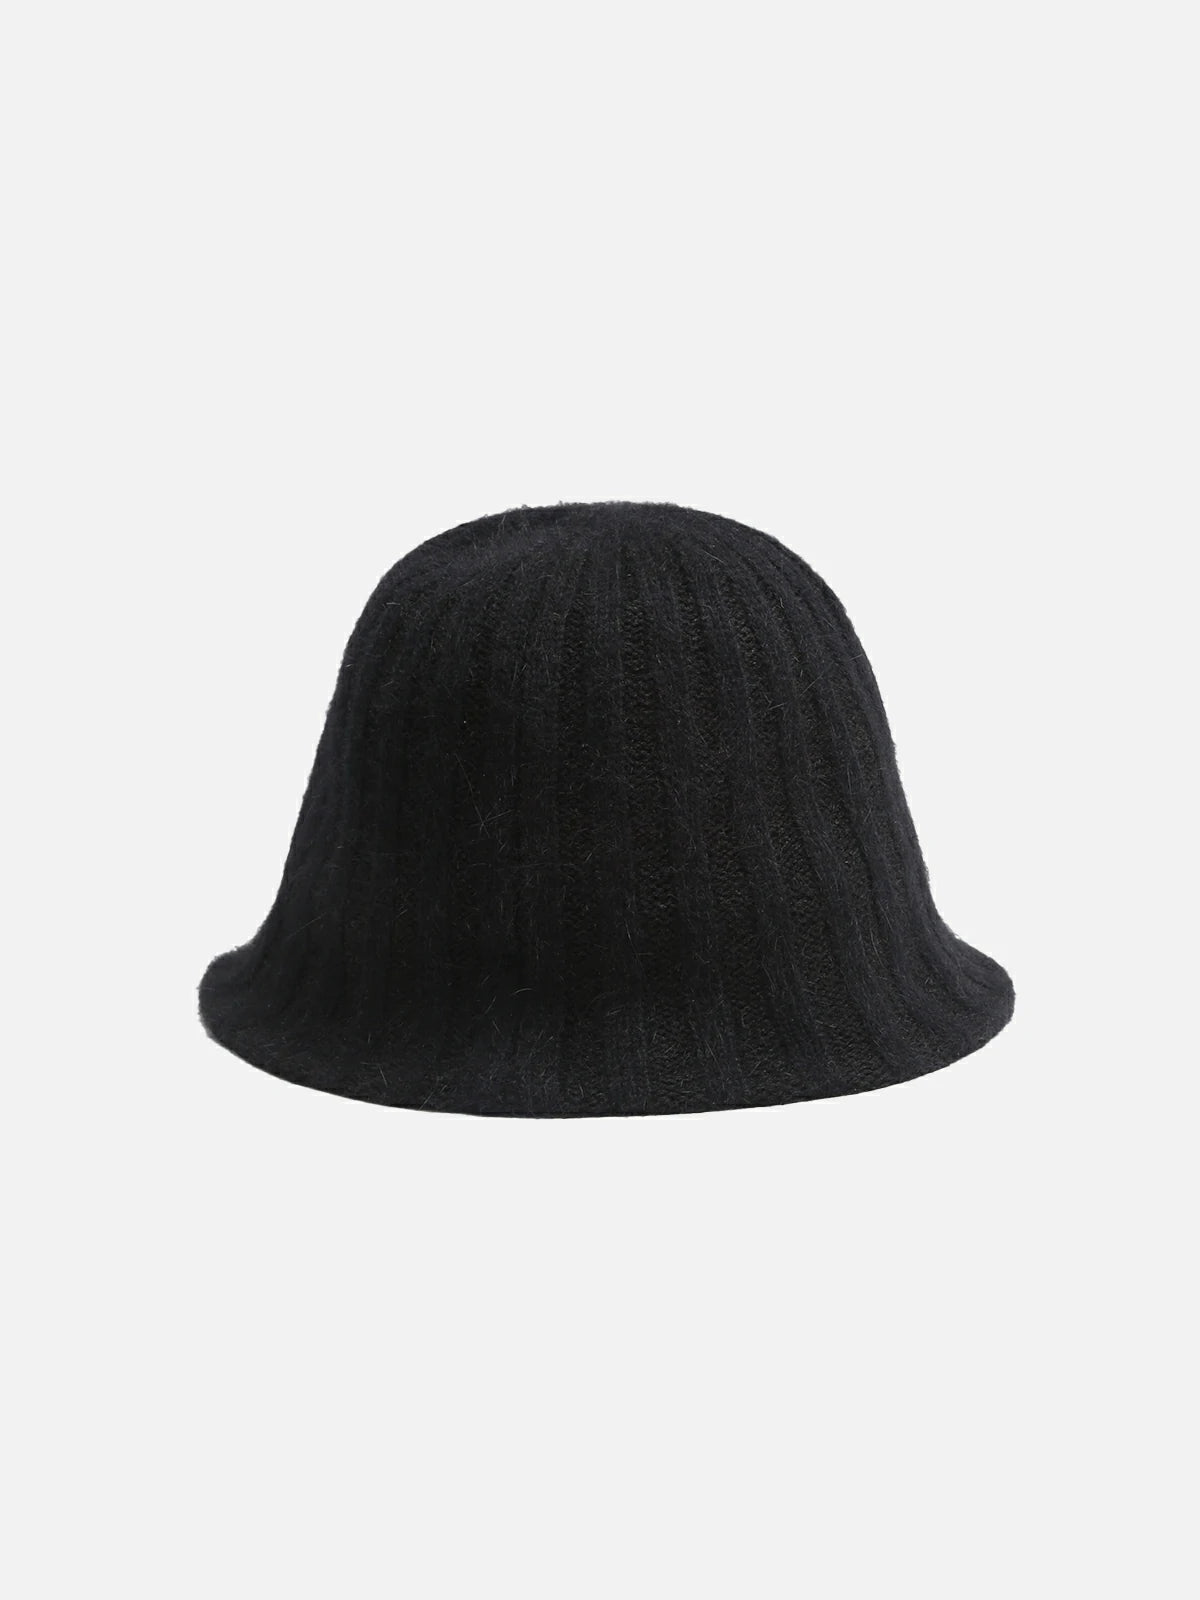 Stylish black bucket hat for winter